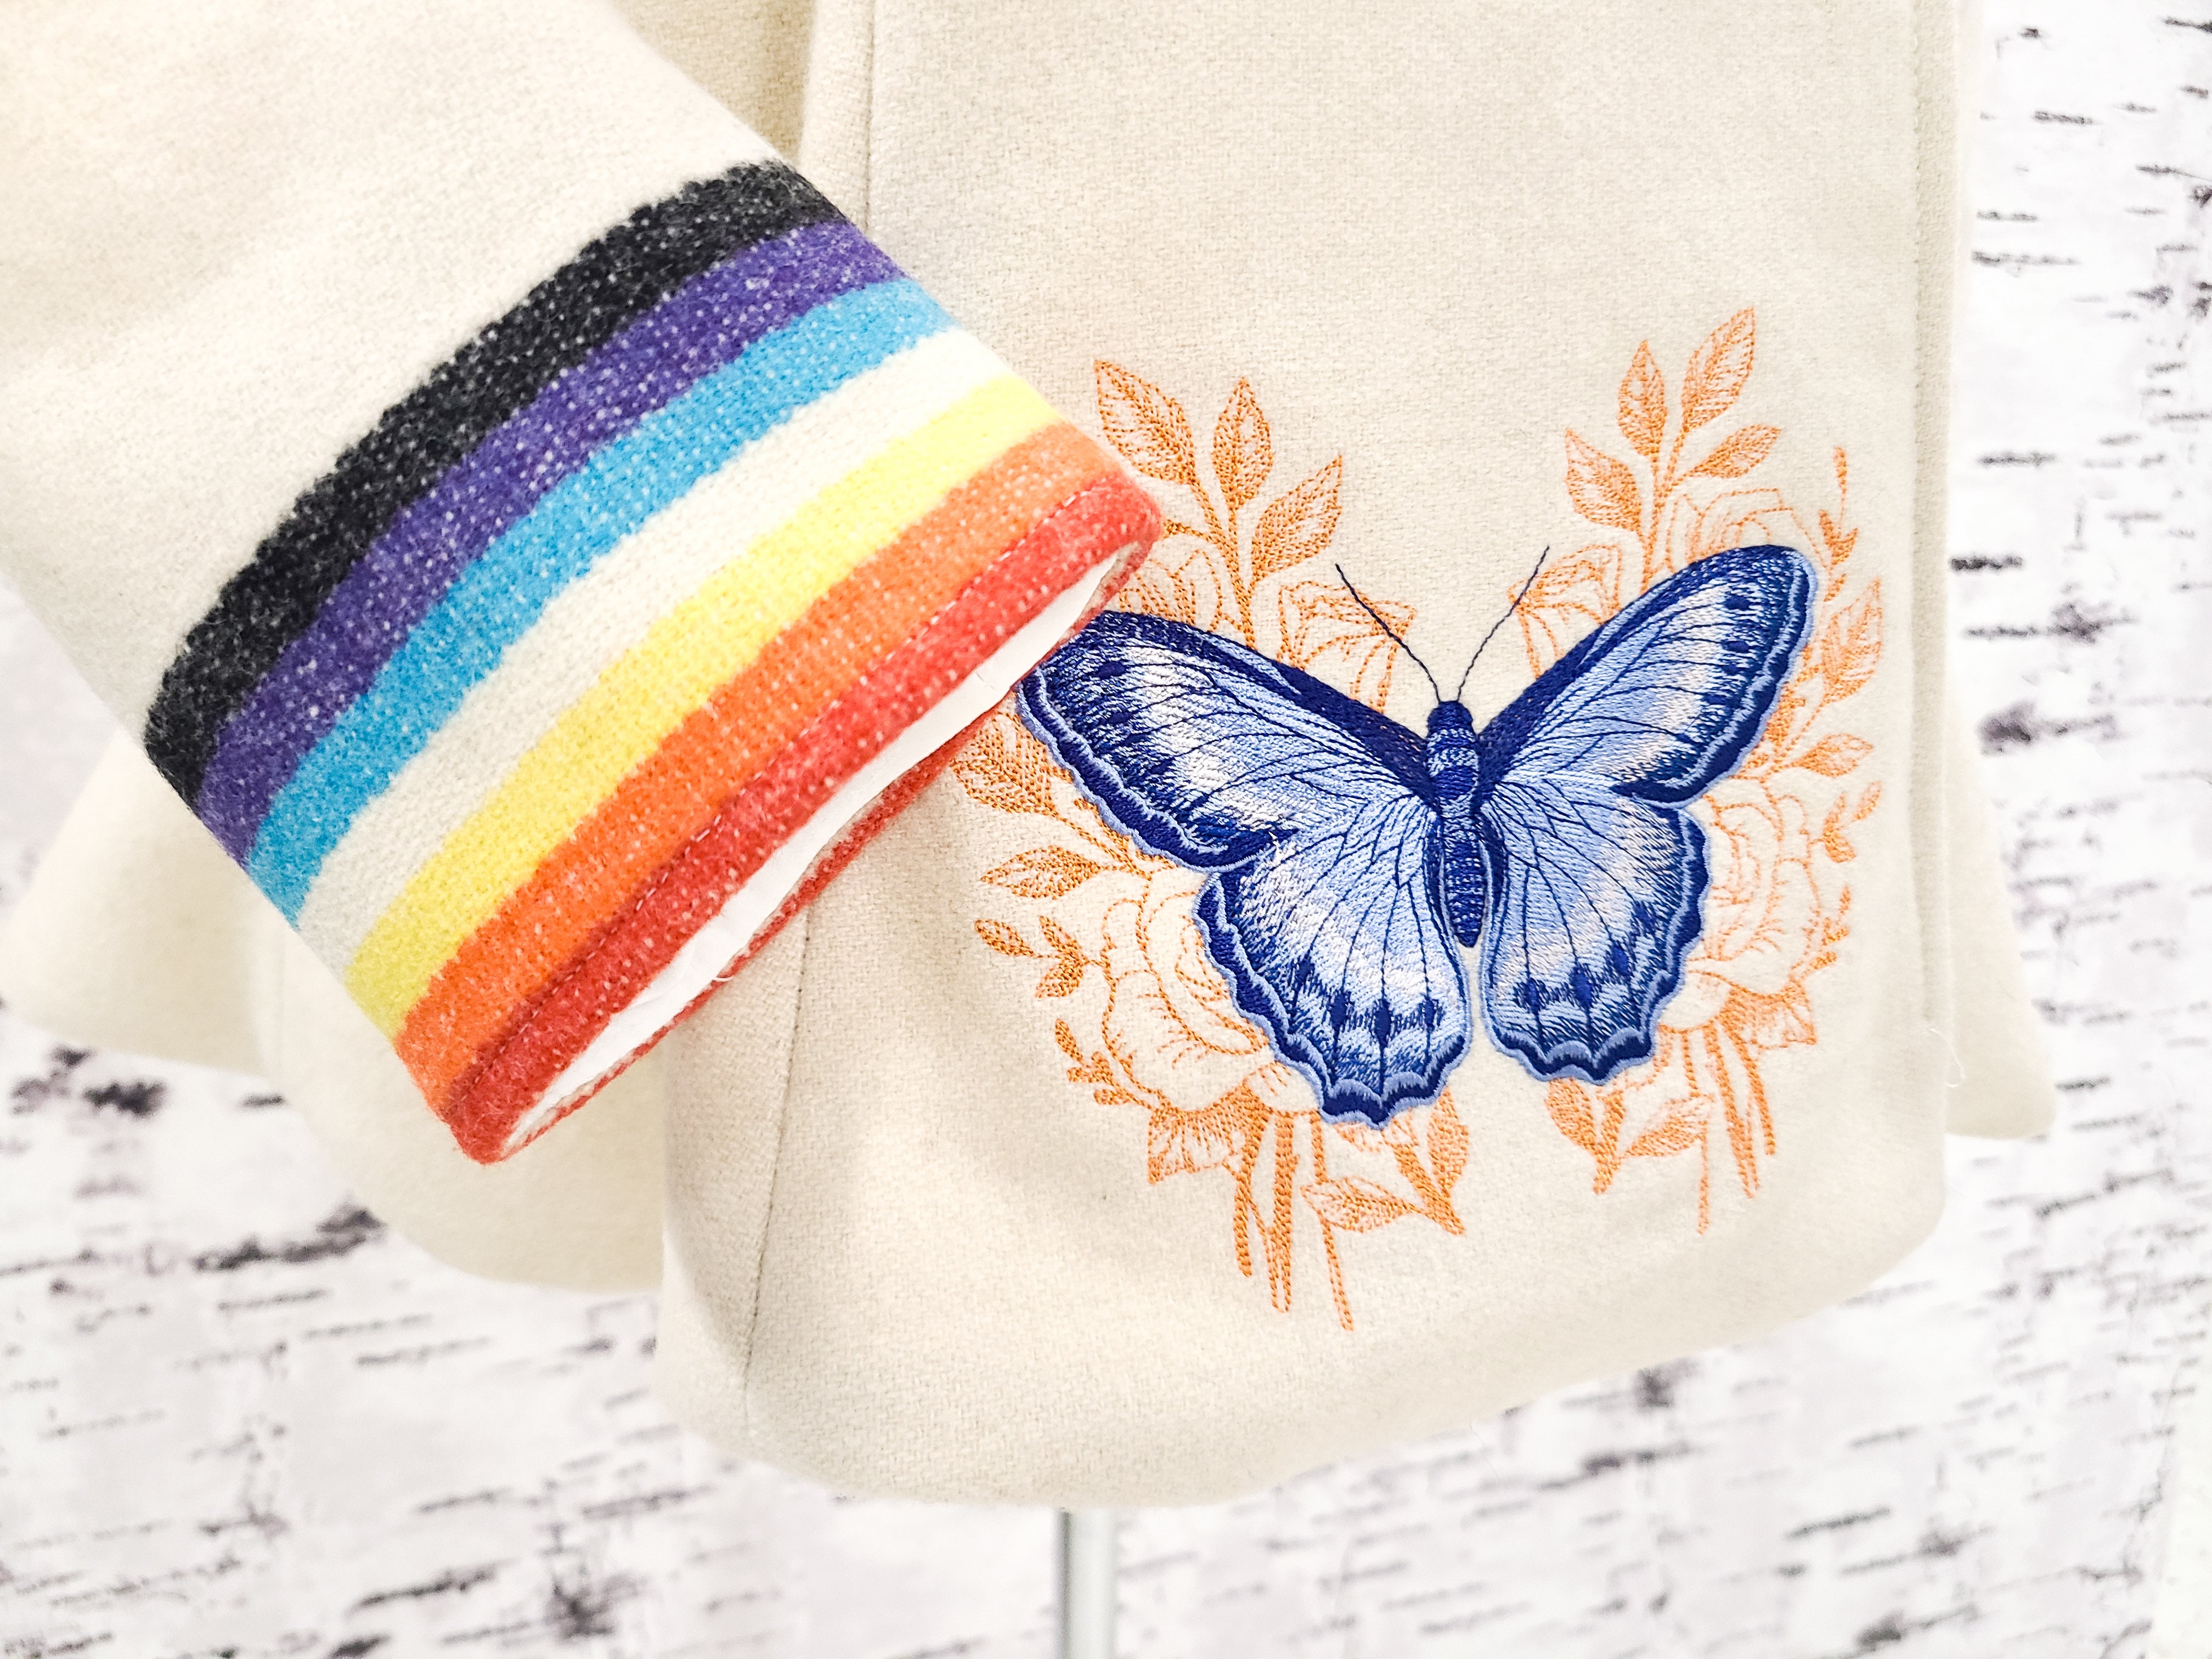 Handmade Cream Wool Coat w/ Butterfly Design